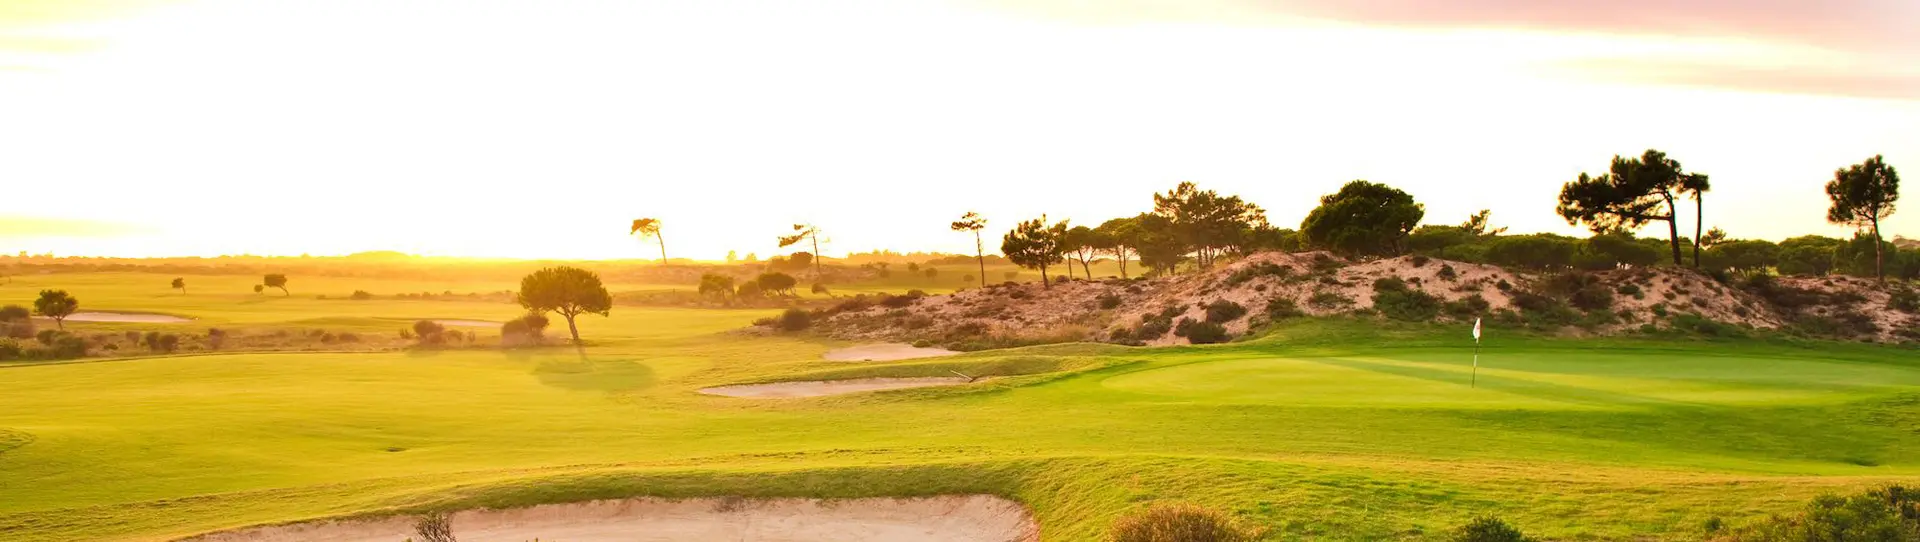 Portugal golf courses - Oitavos Dunes - Photo 3